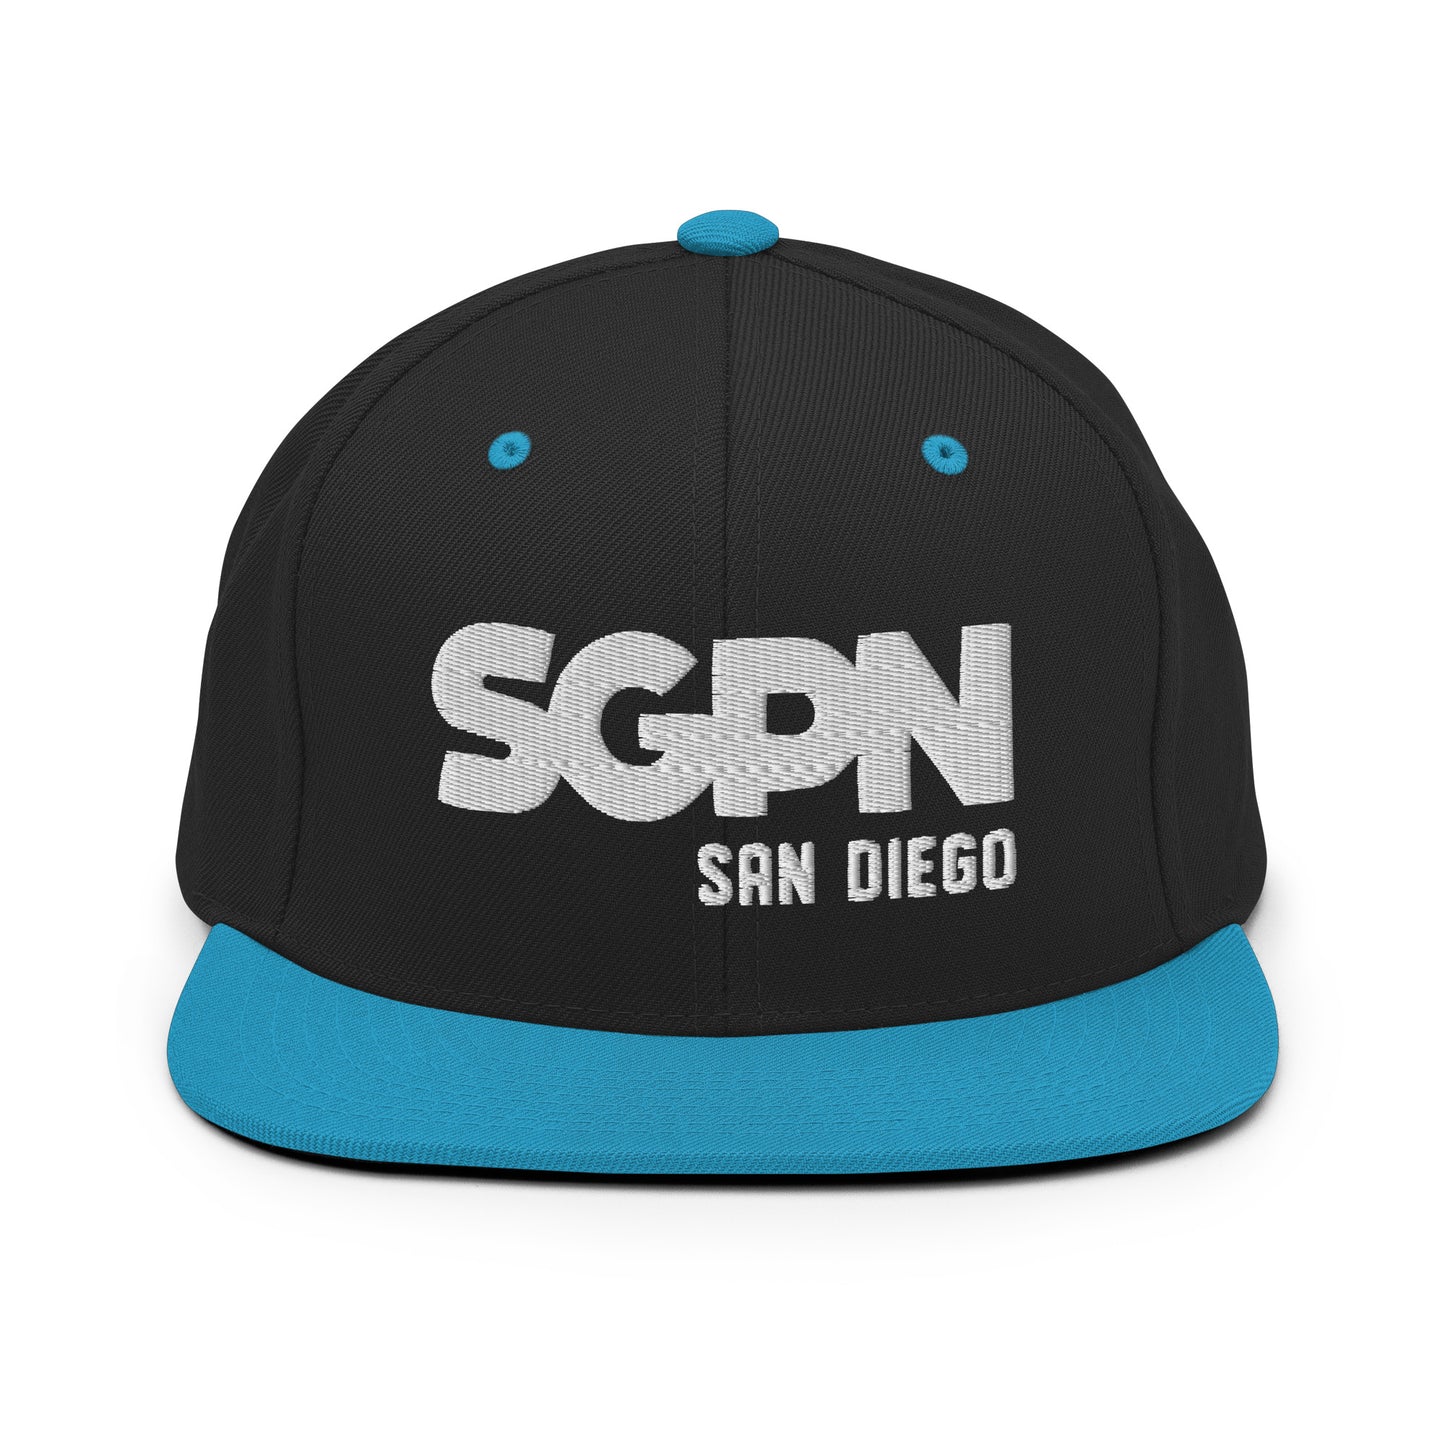 SGPN - San Diego edition - Snapback Hat